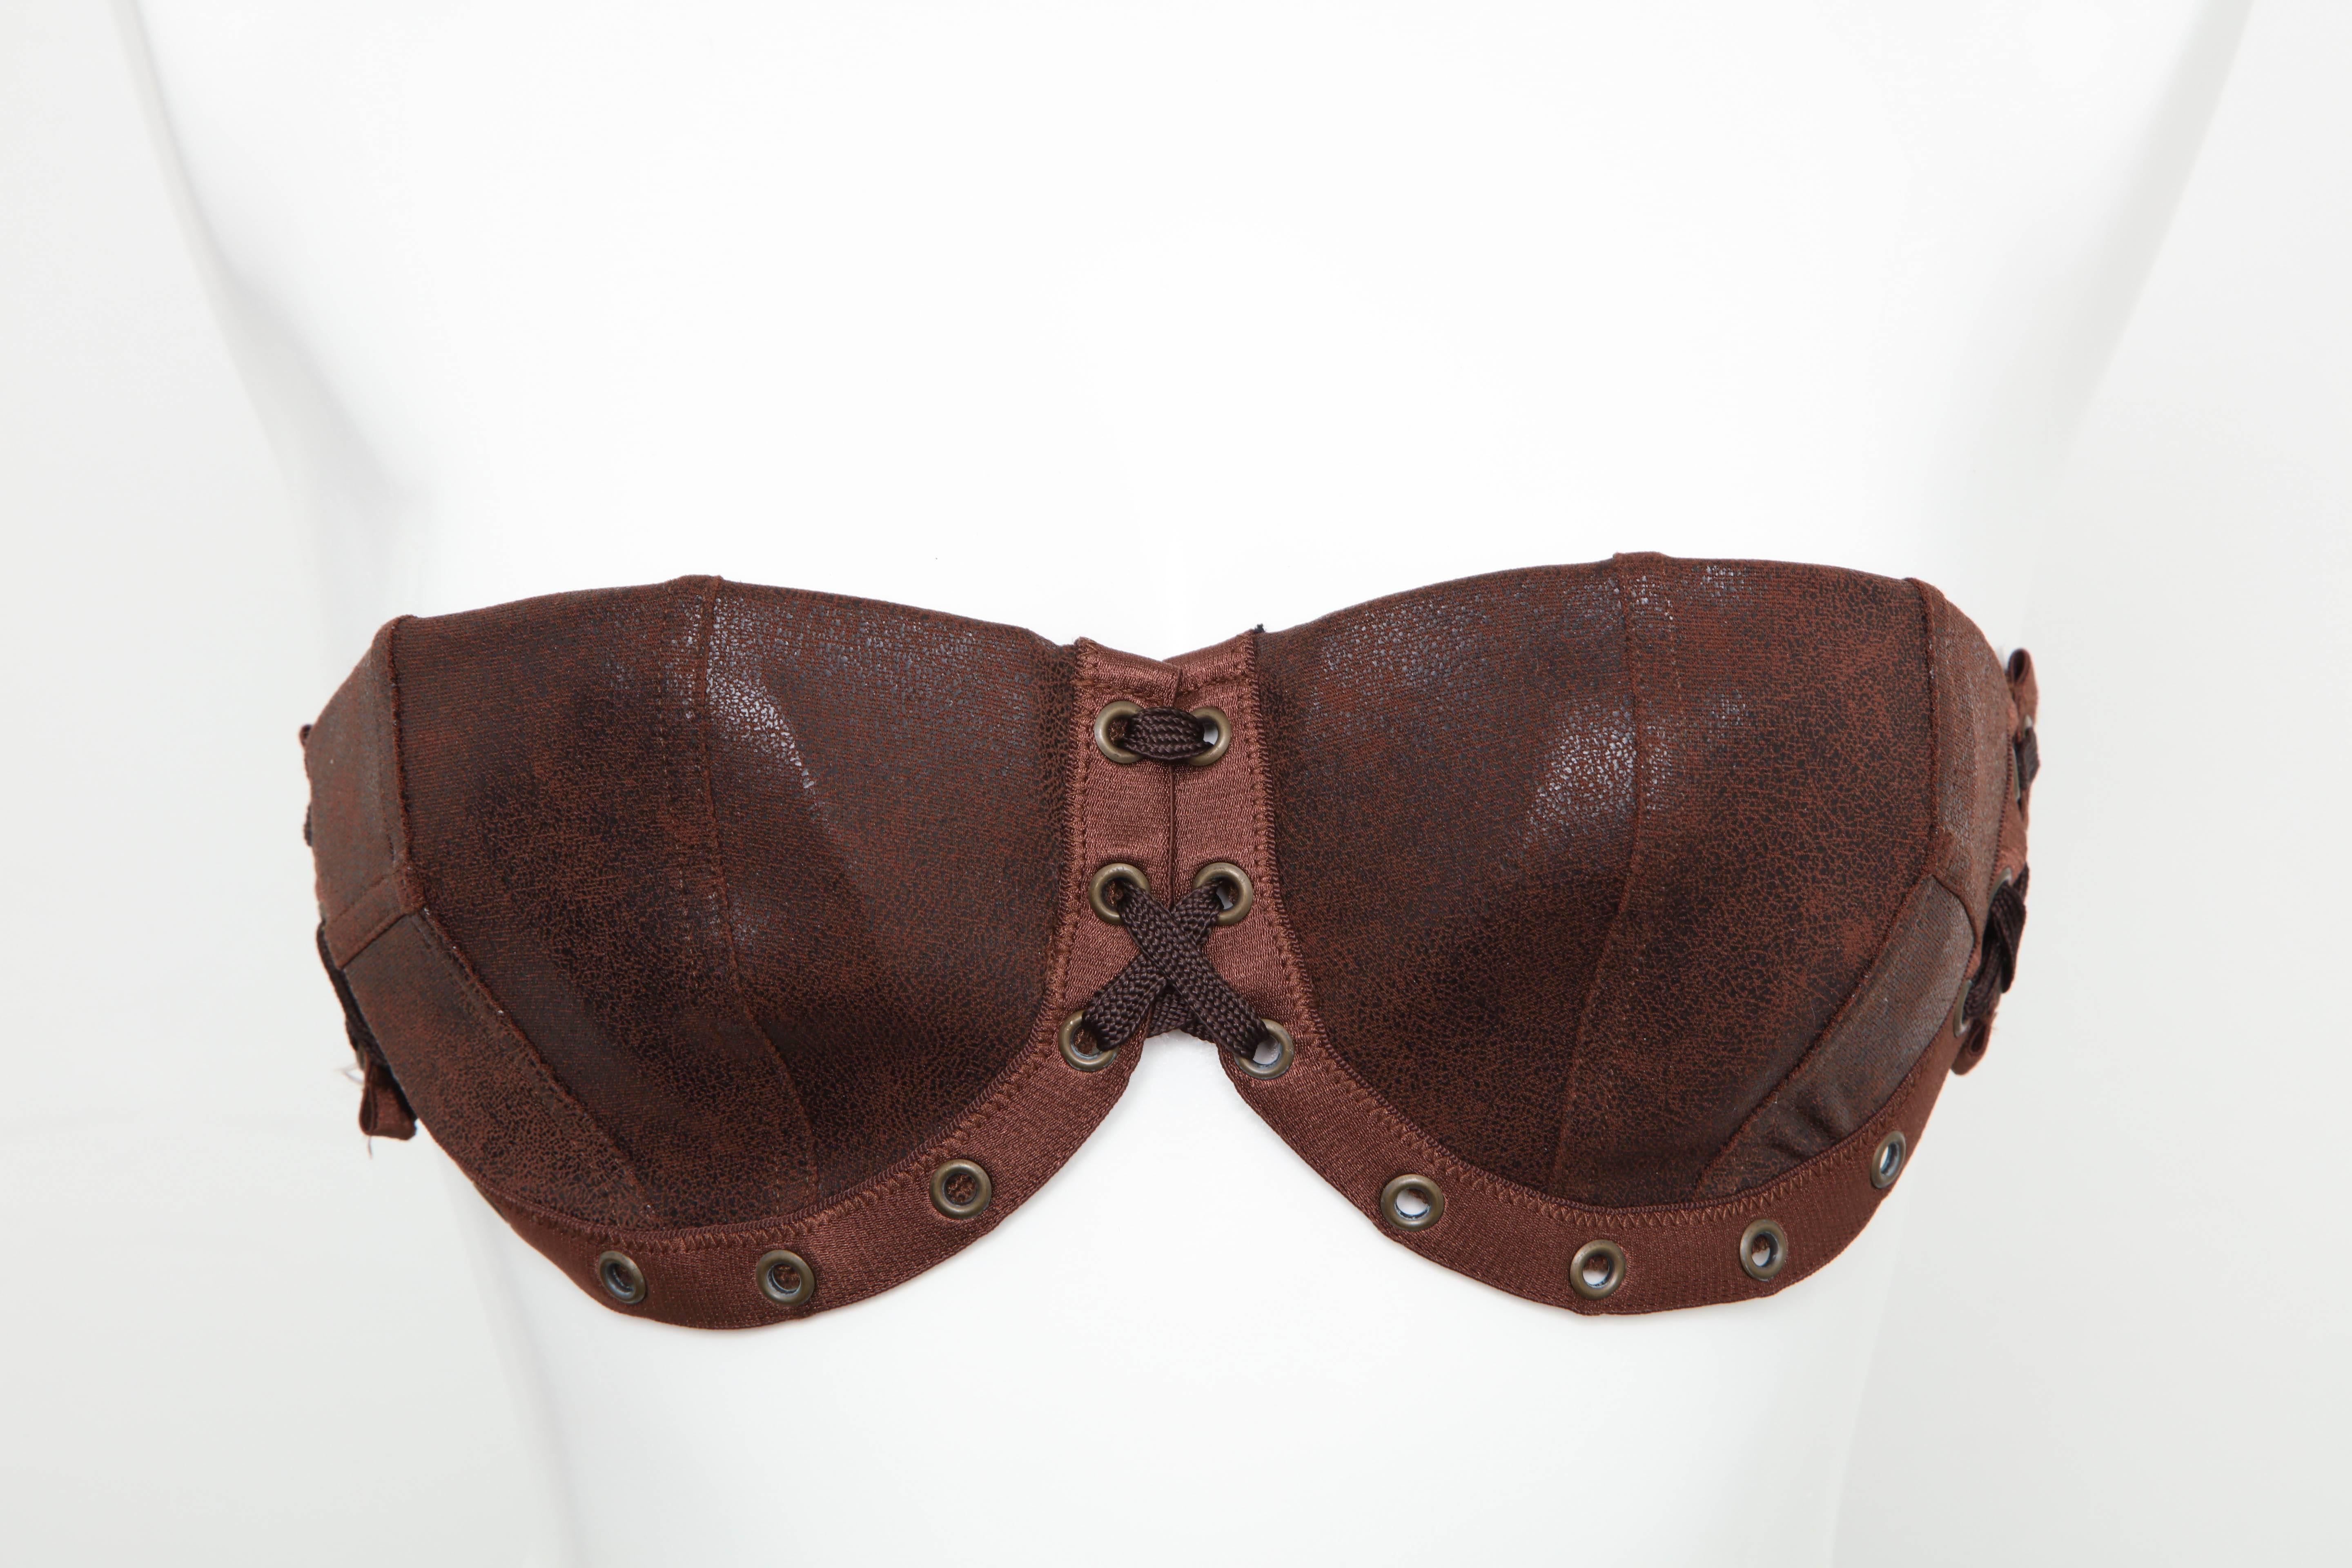 John Galliano for Christian Dior brown faux leather bikini.

FR Size 38